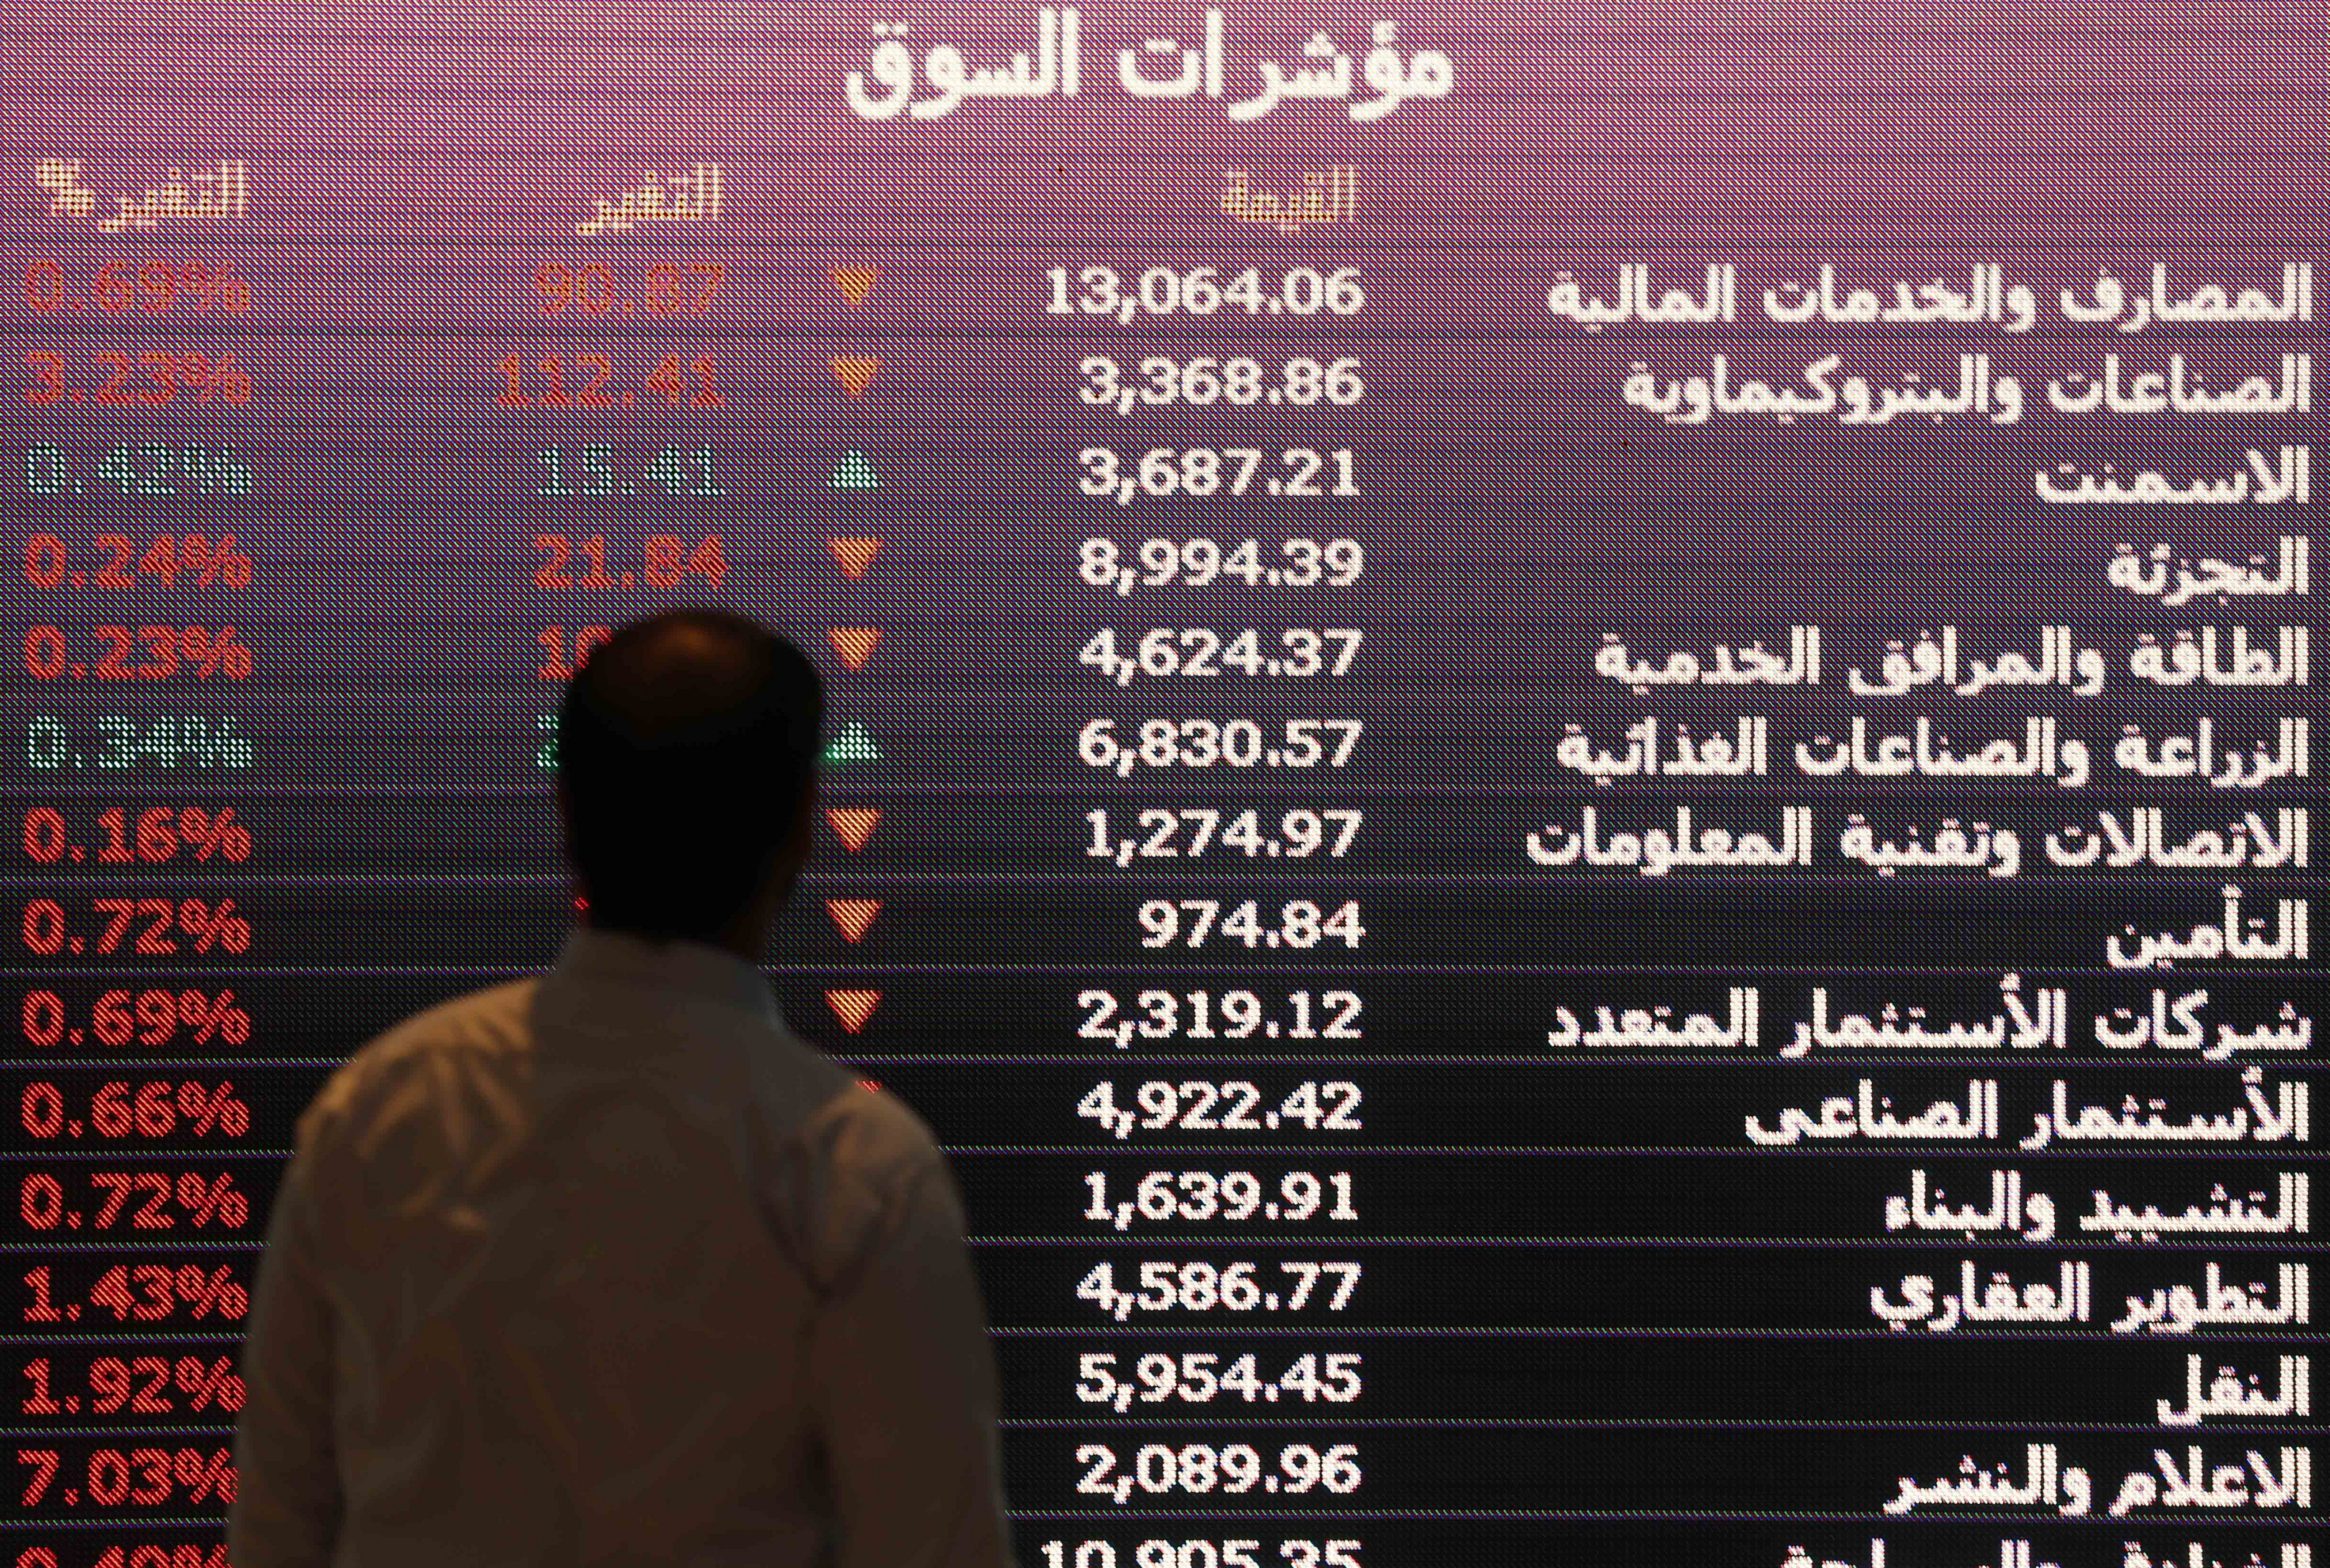 An investor monitors a screen displaying stock information at the Saudi Stock Exchange (Tadawul) in Riyadh, Saudi Arabia, January 18, 2016. REUTERS/Faisal Al Nasser